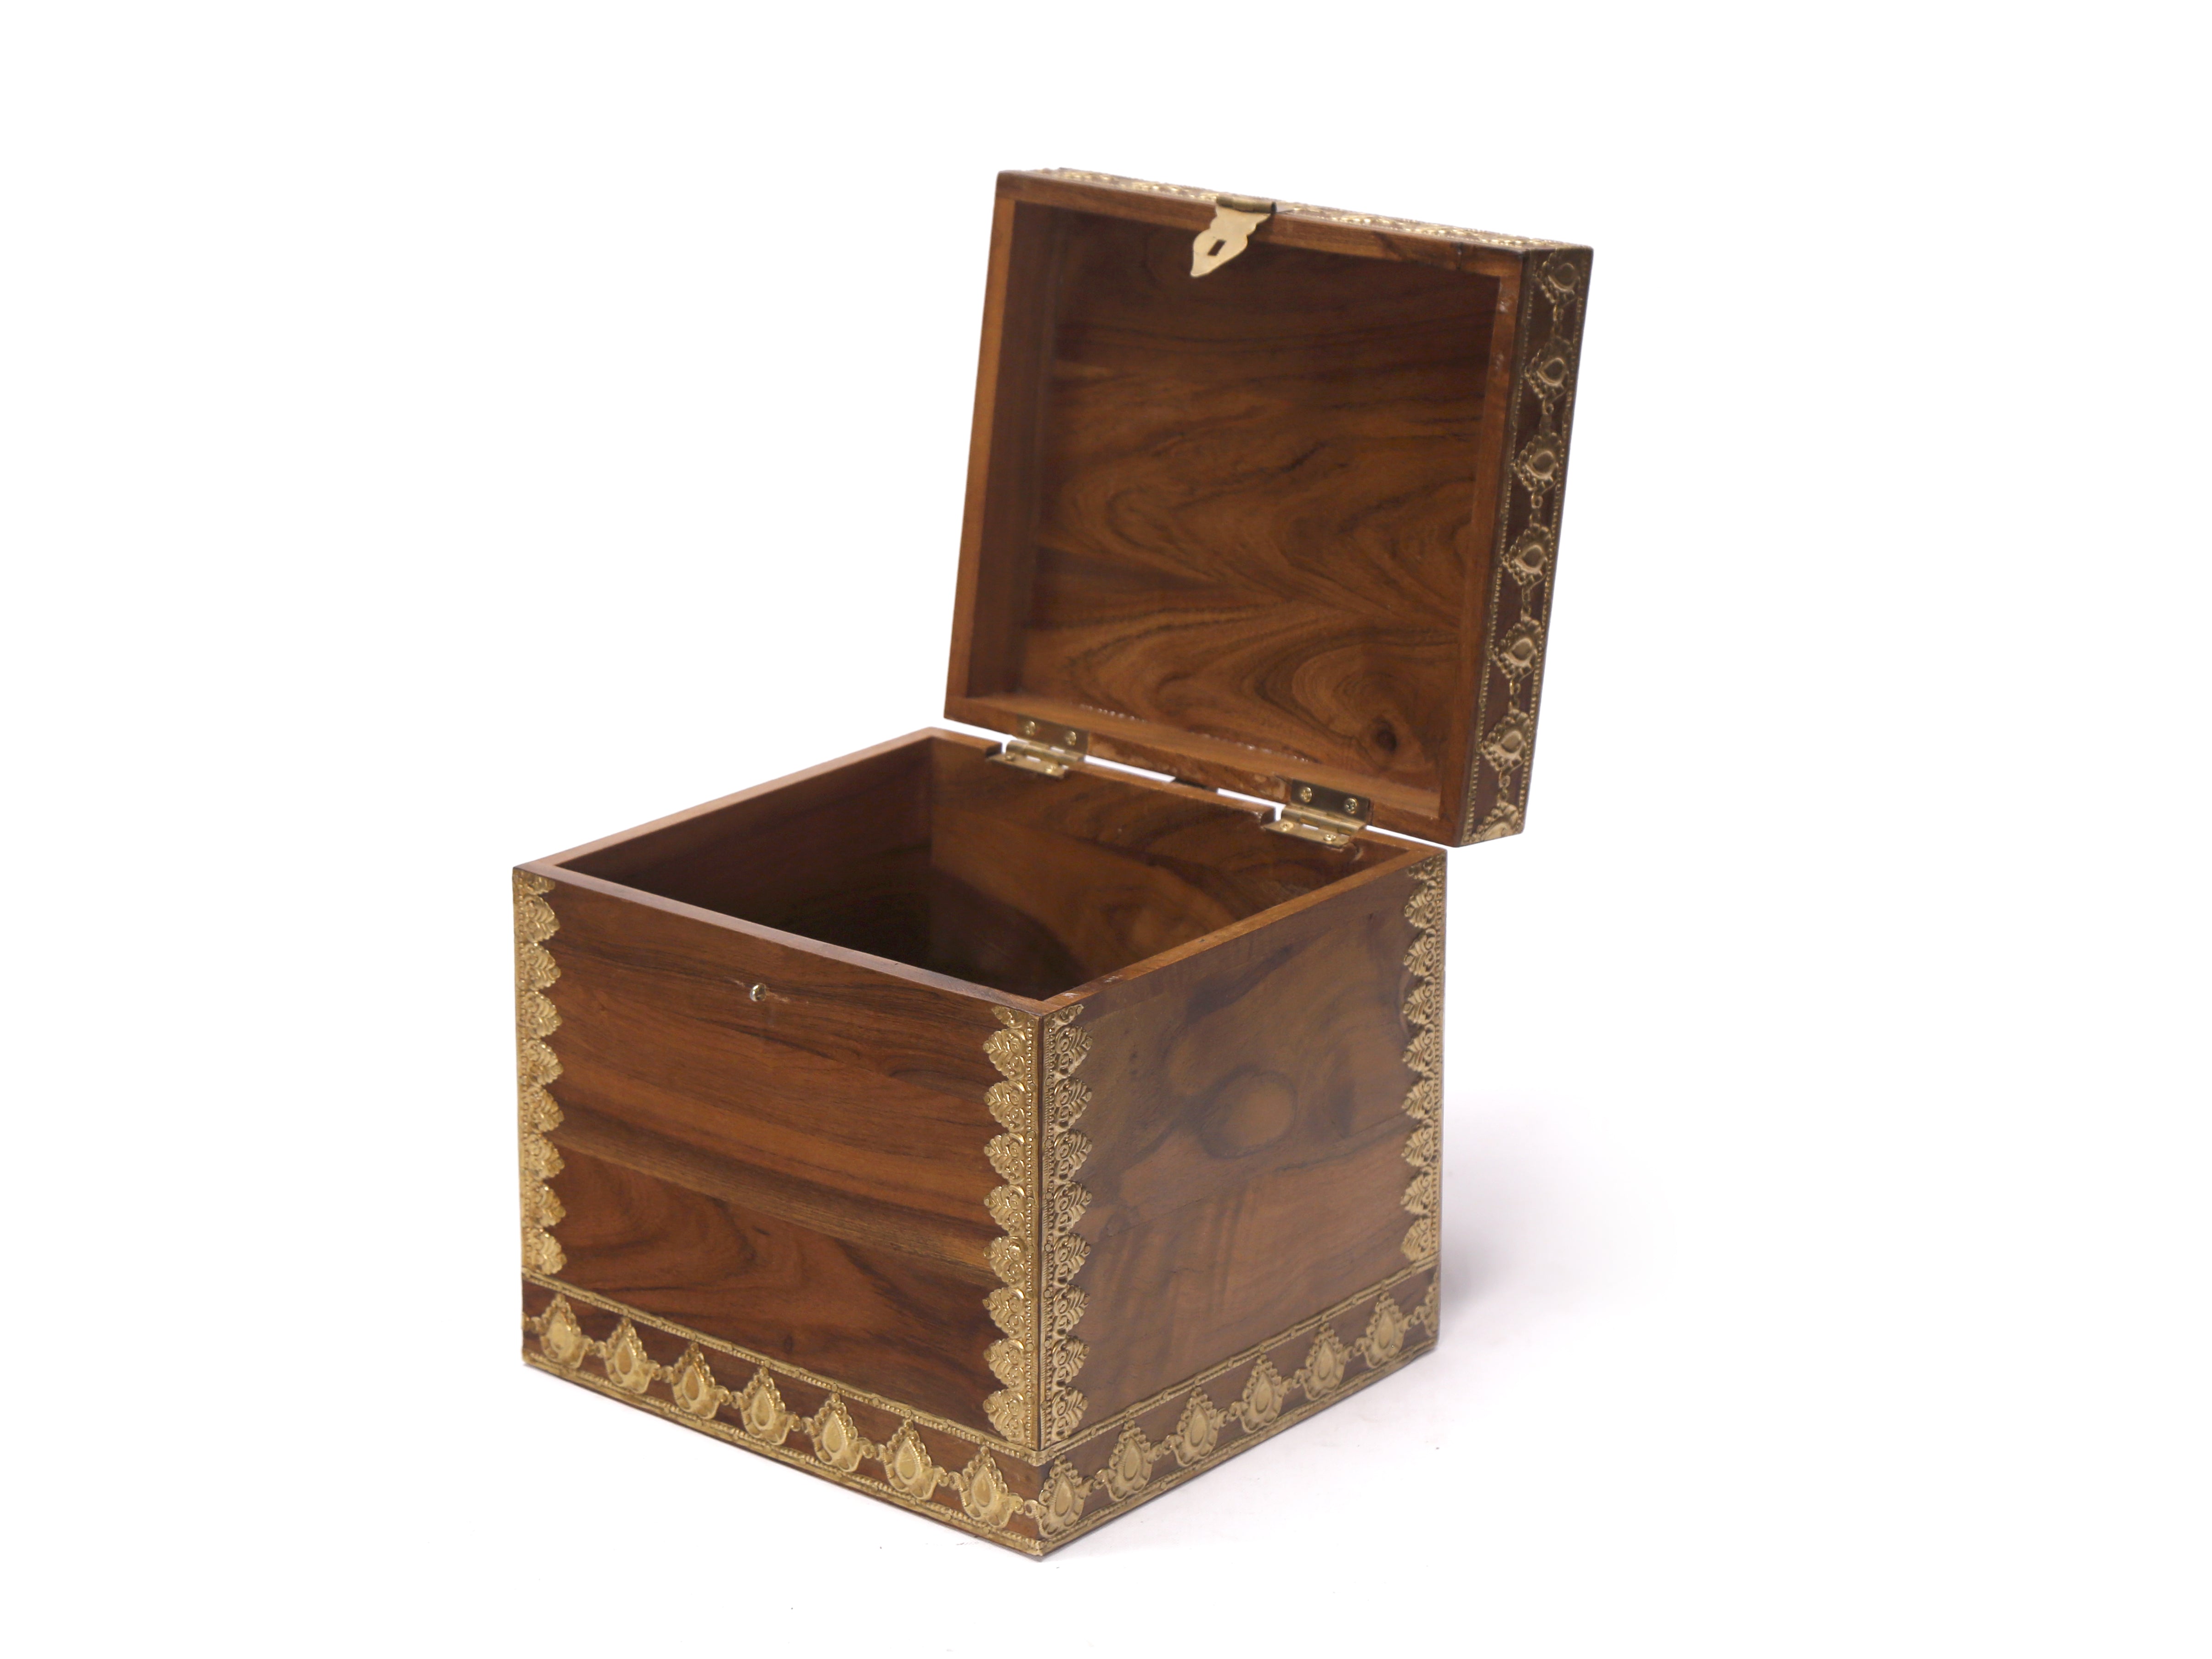 Wooden Square Box Wooden Box